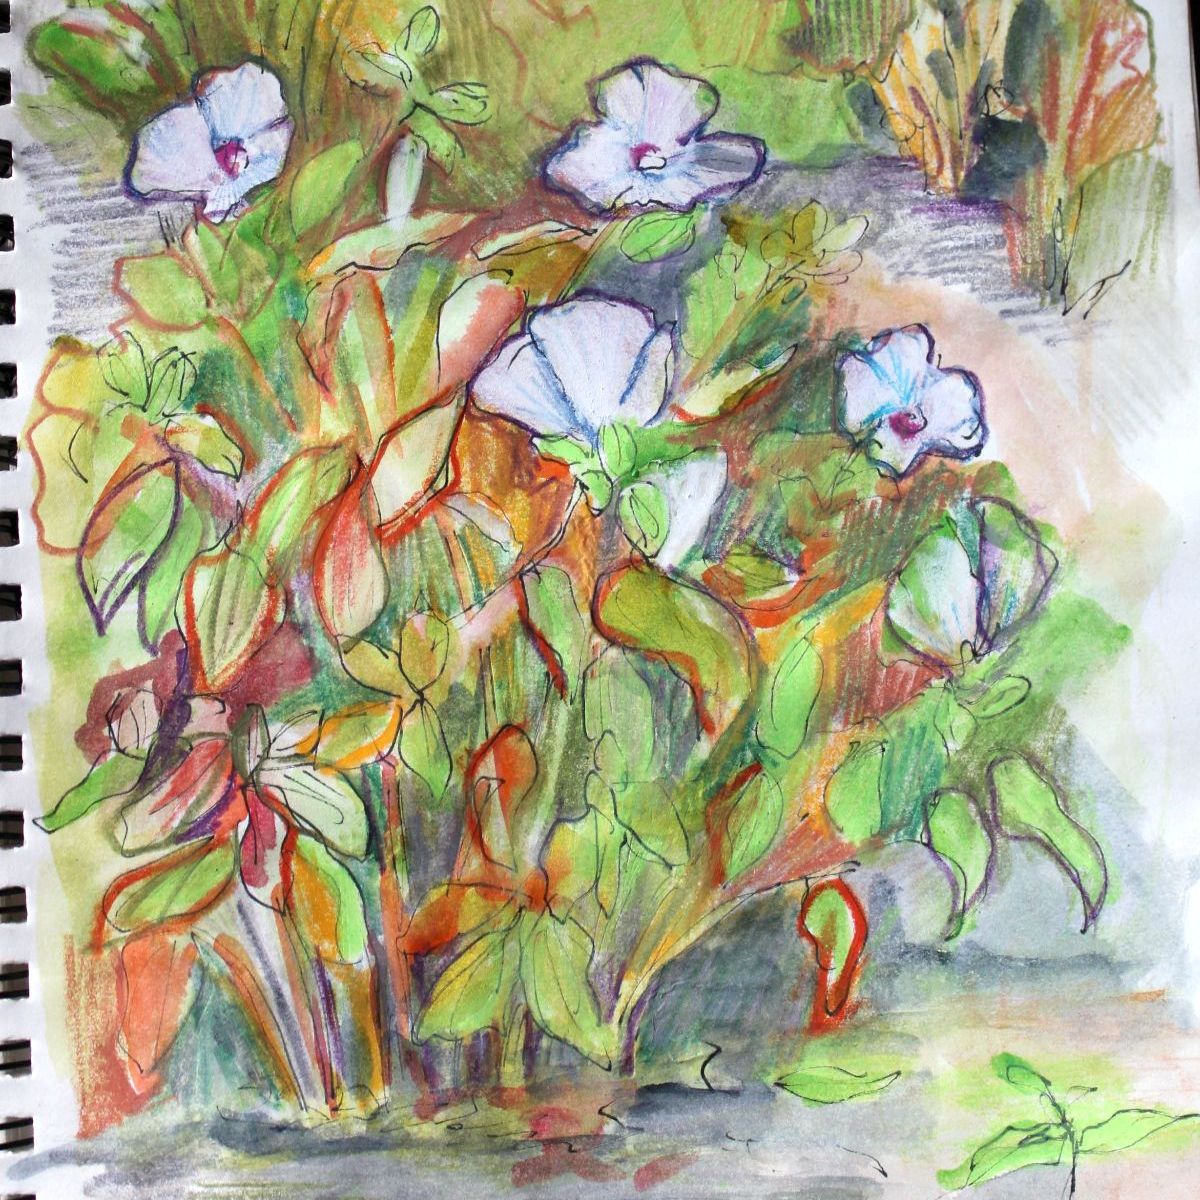 Nature Journaling in Del Ray Artisans’ Garden with Margaret Wohler